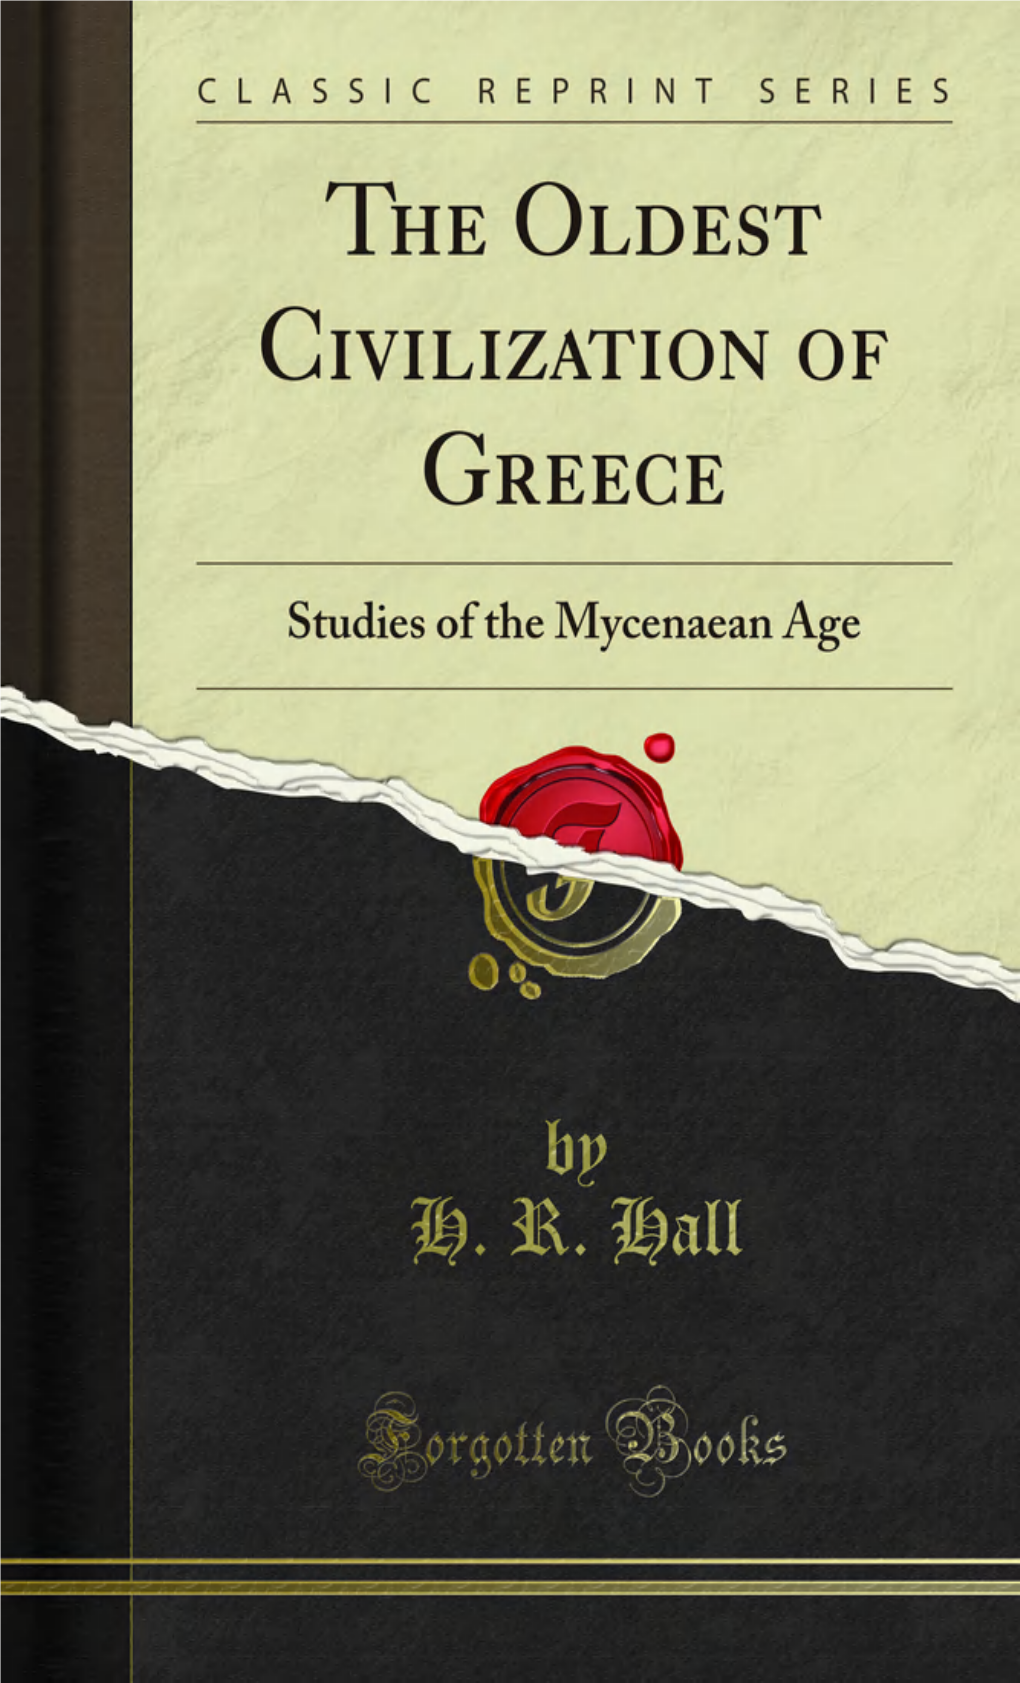 The Oldest Civilization of Greece: Studies of the Mycenaean